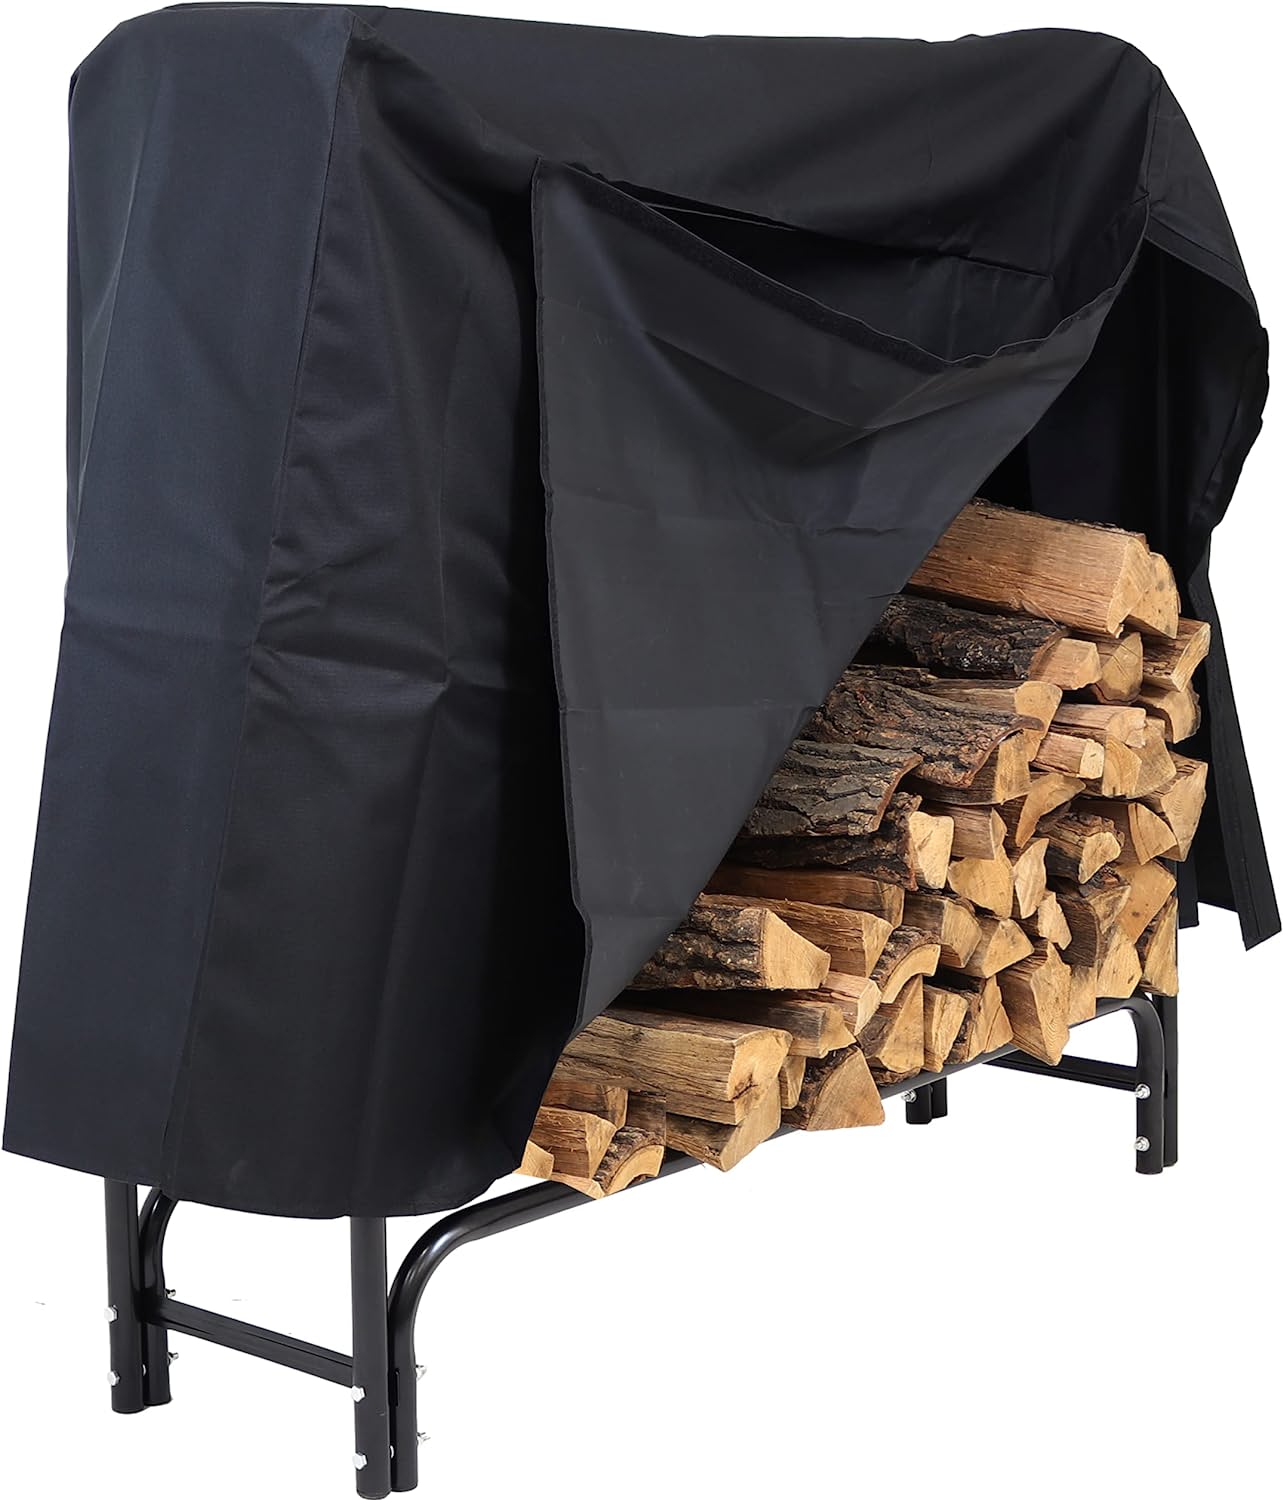 Sunnydaze Decor Rust Resistant Firewood Rack & Cover, 4-Foot